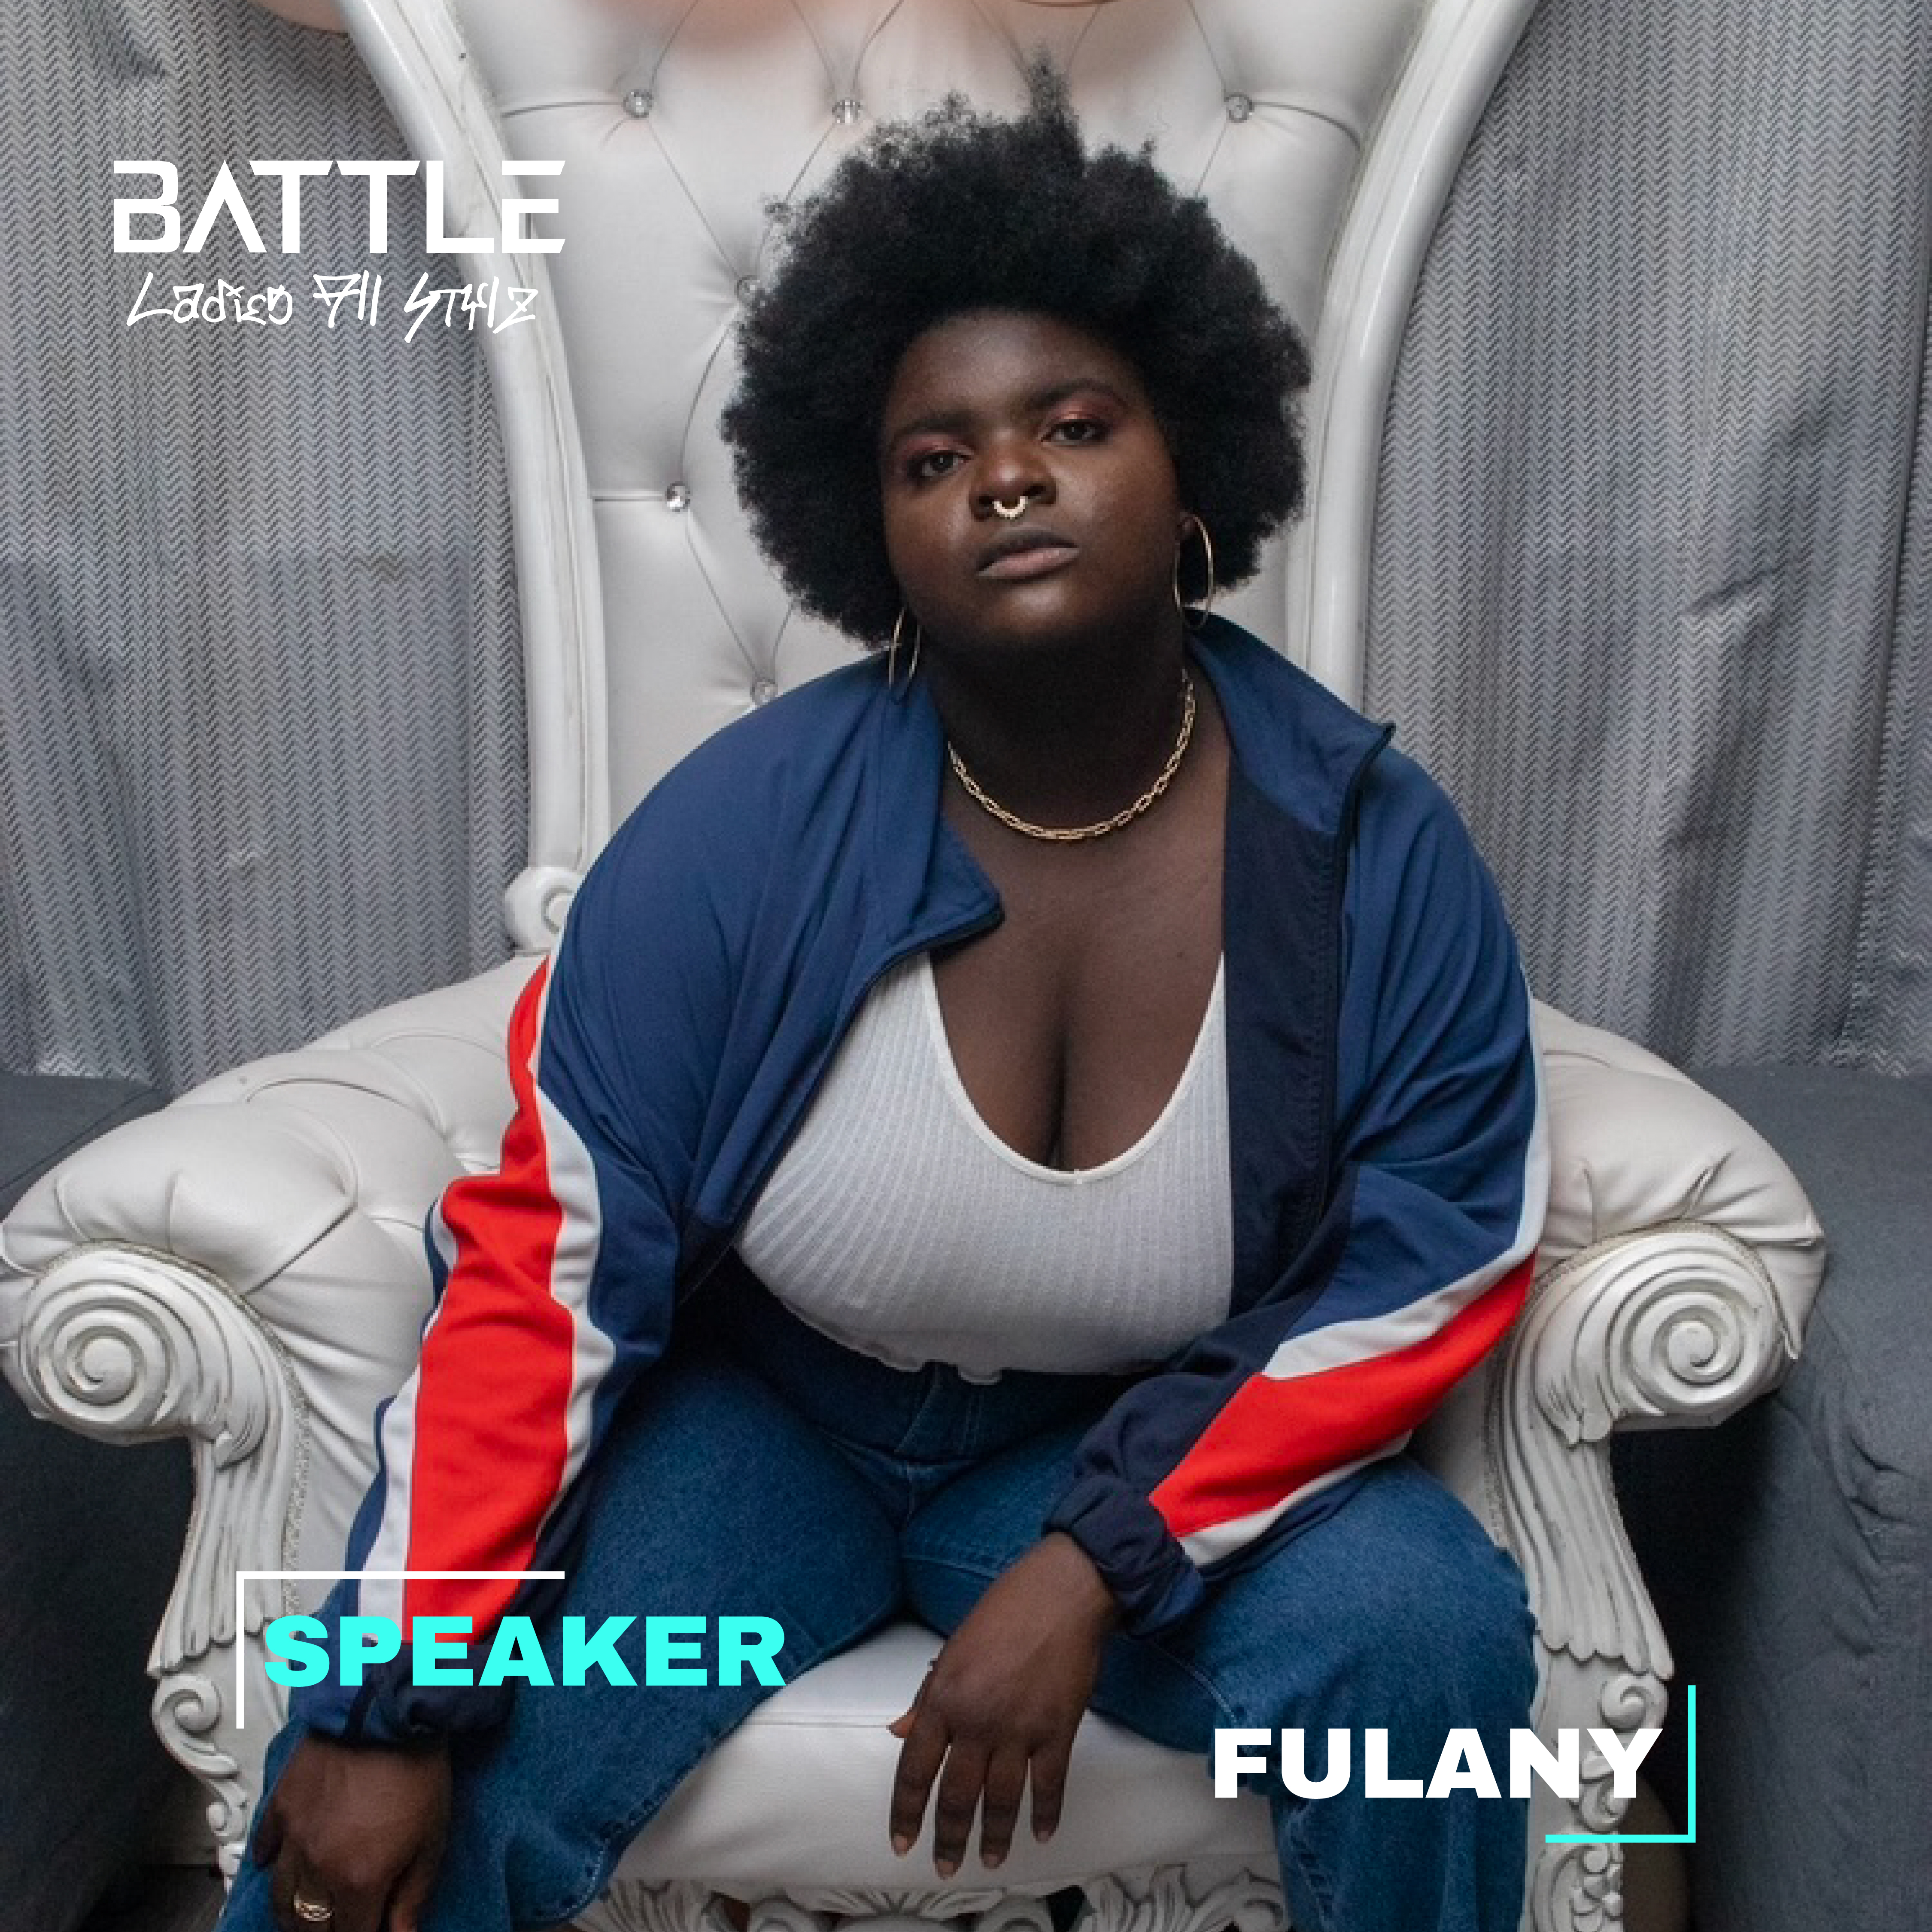 Battle Ladies All Stylz 3 - speaker-fulany.